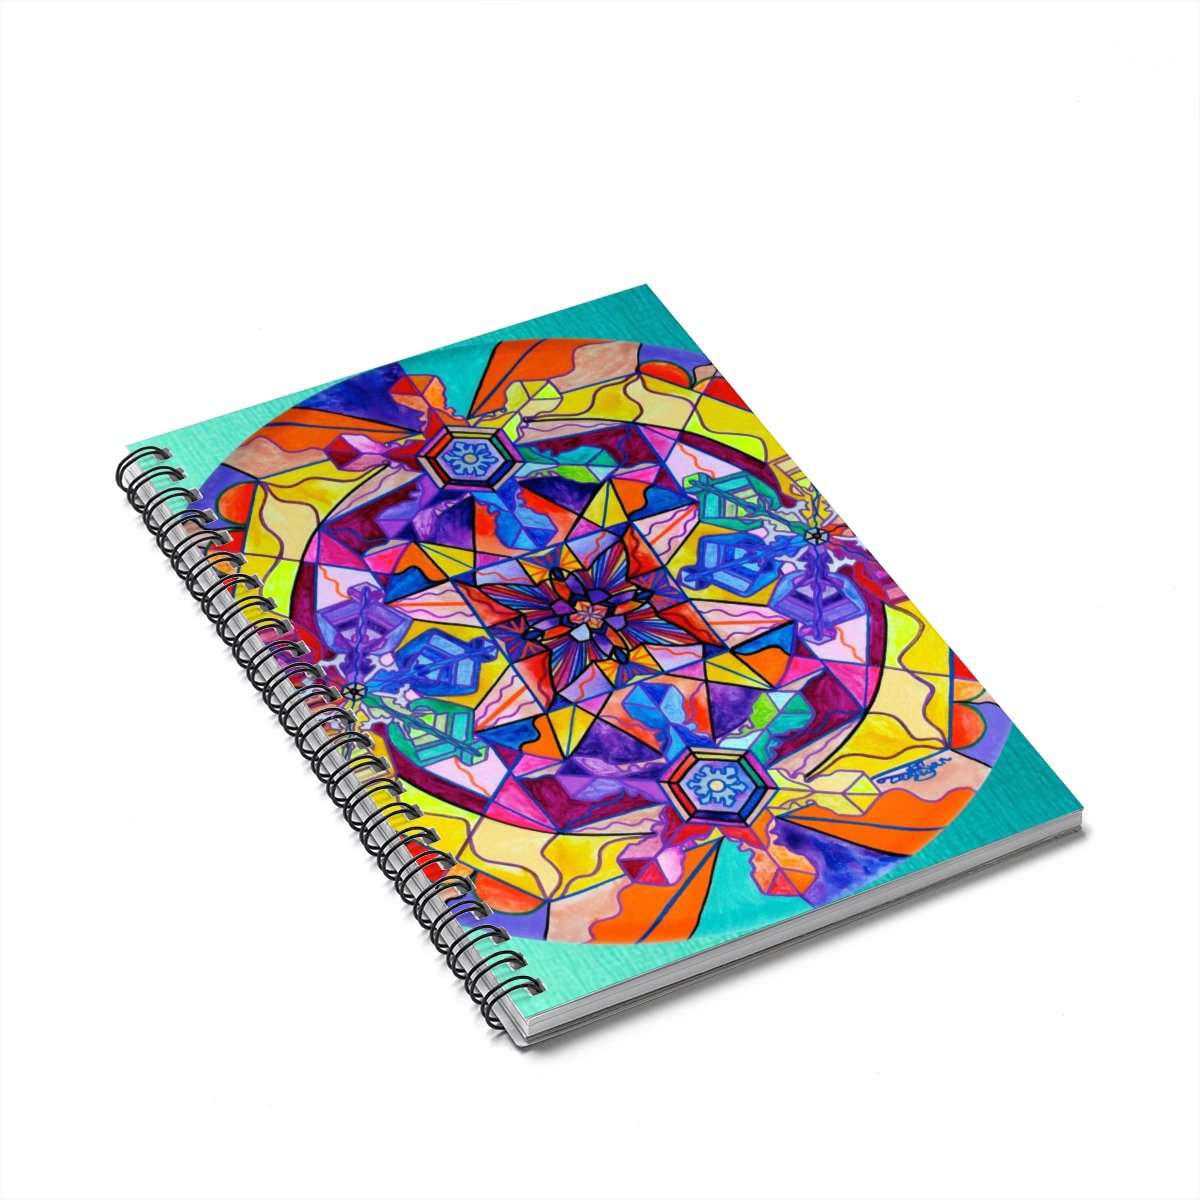 Synchronicity - Spiral Notebook